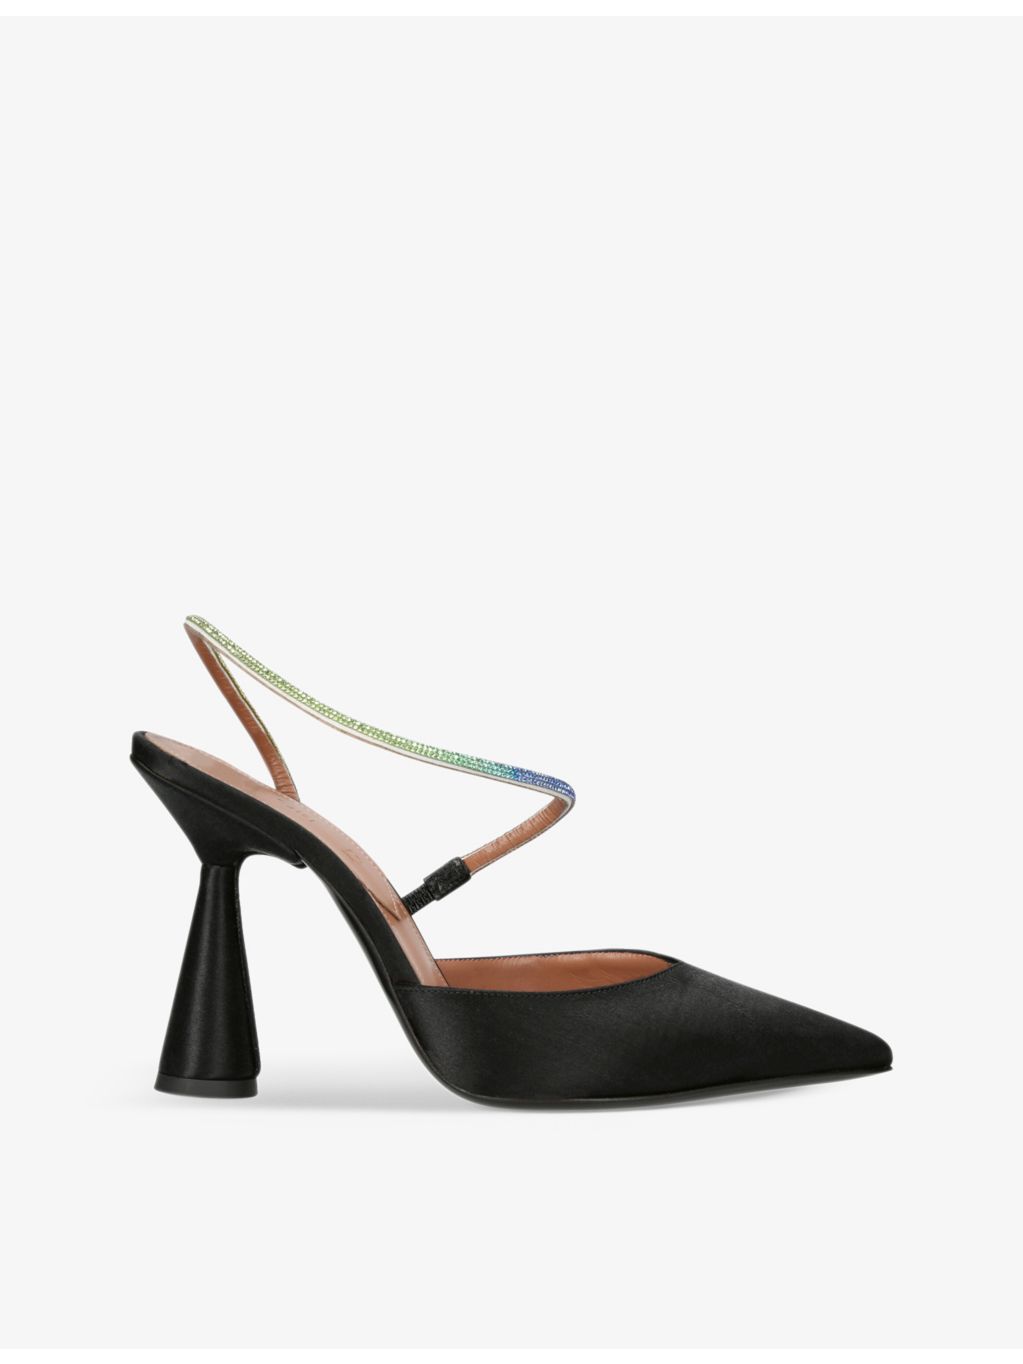 D'ACCORI - Saturn 100 crystal-embellished satin heeled shoes